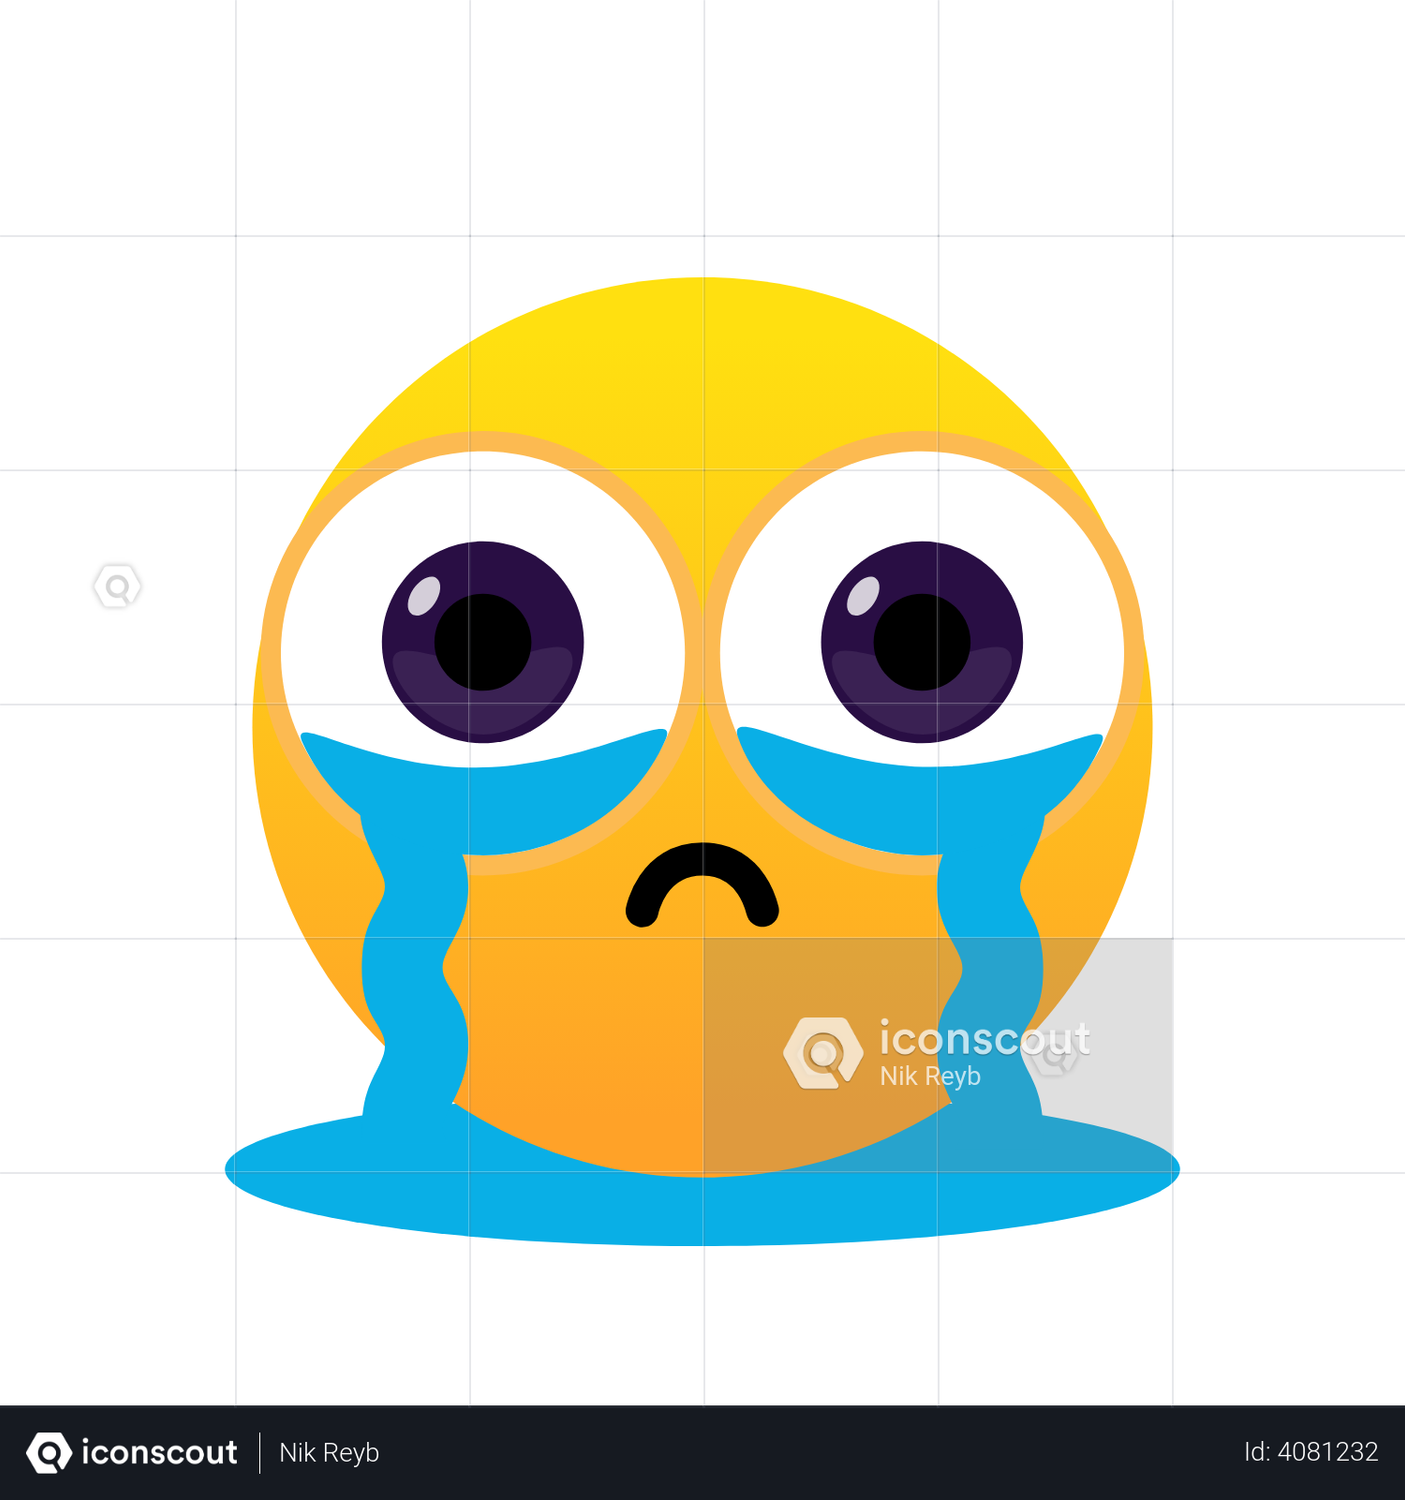 25700 Crying Emoji Stock Photos Pictures  RoyaltyFree Images  iStock   Crying emoji vector Laughing crying emoji Crying emoji face